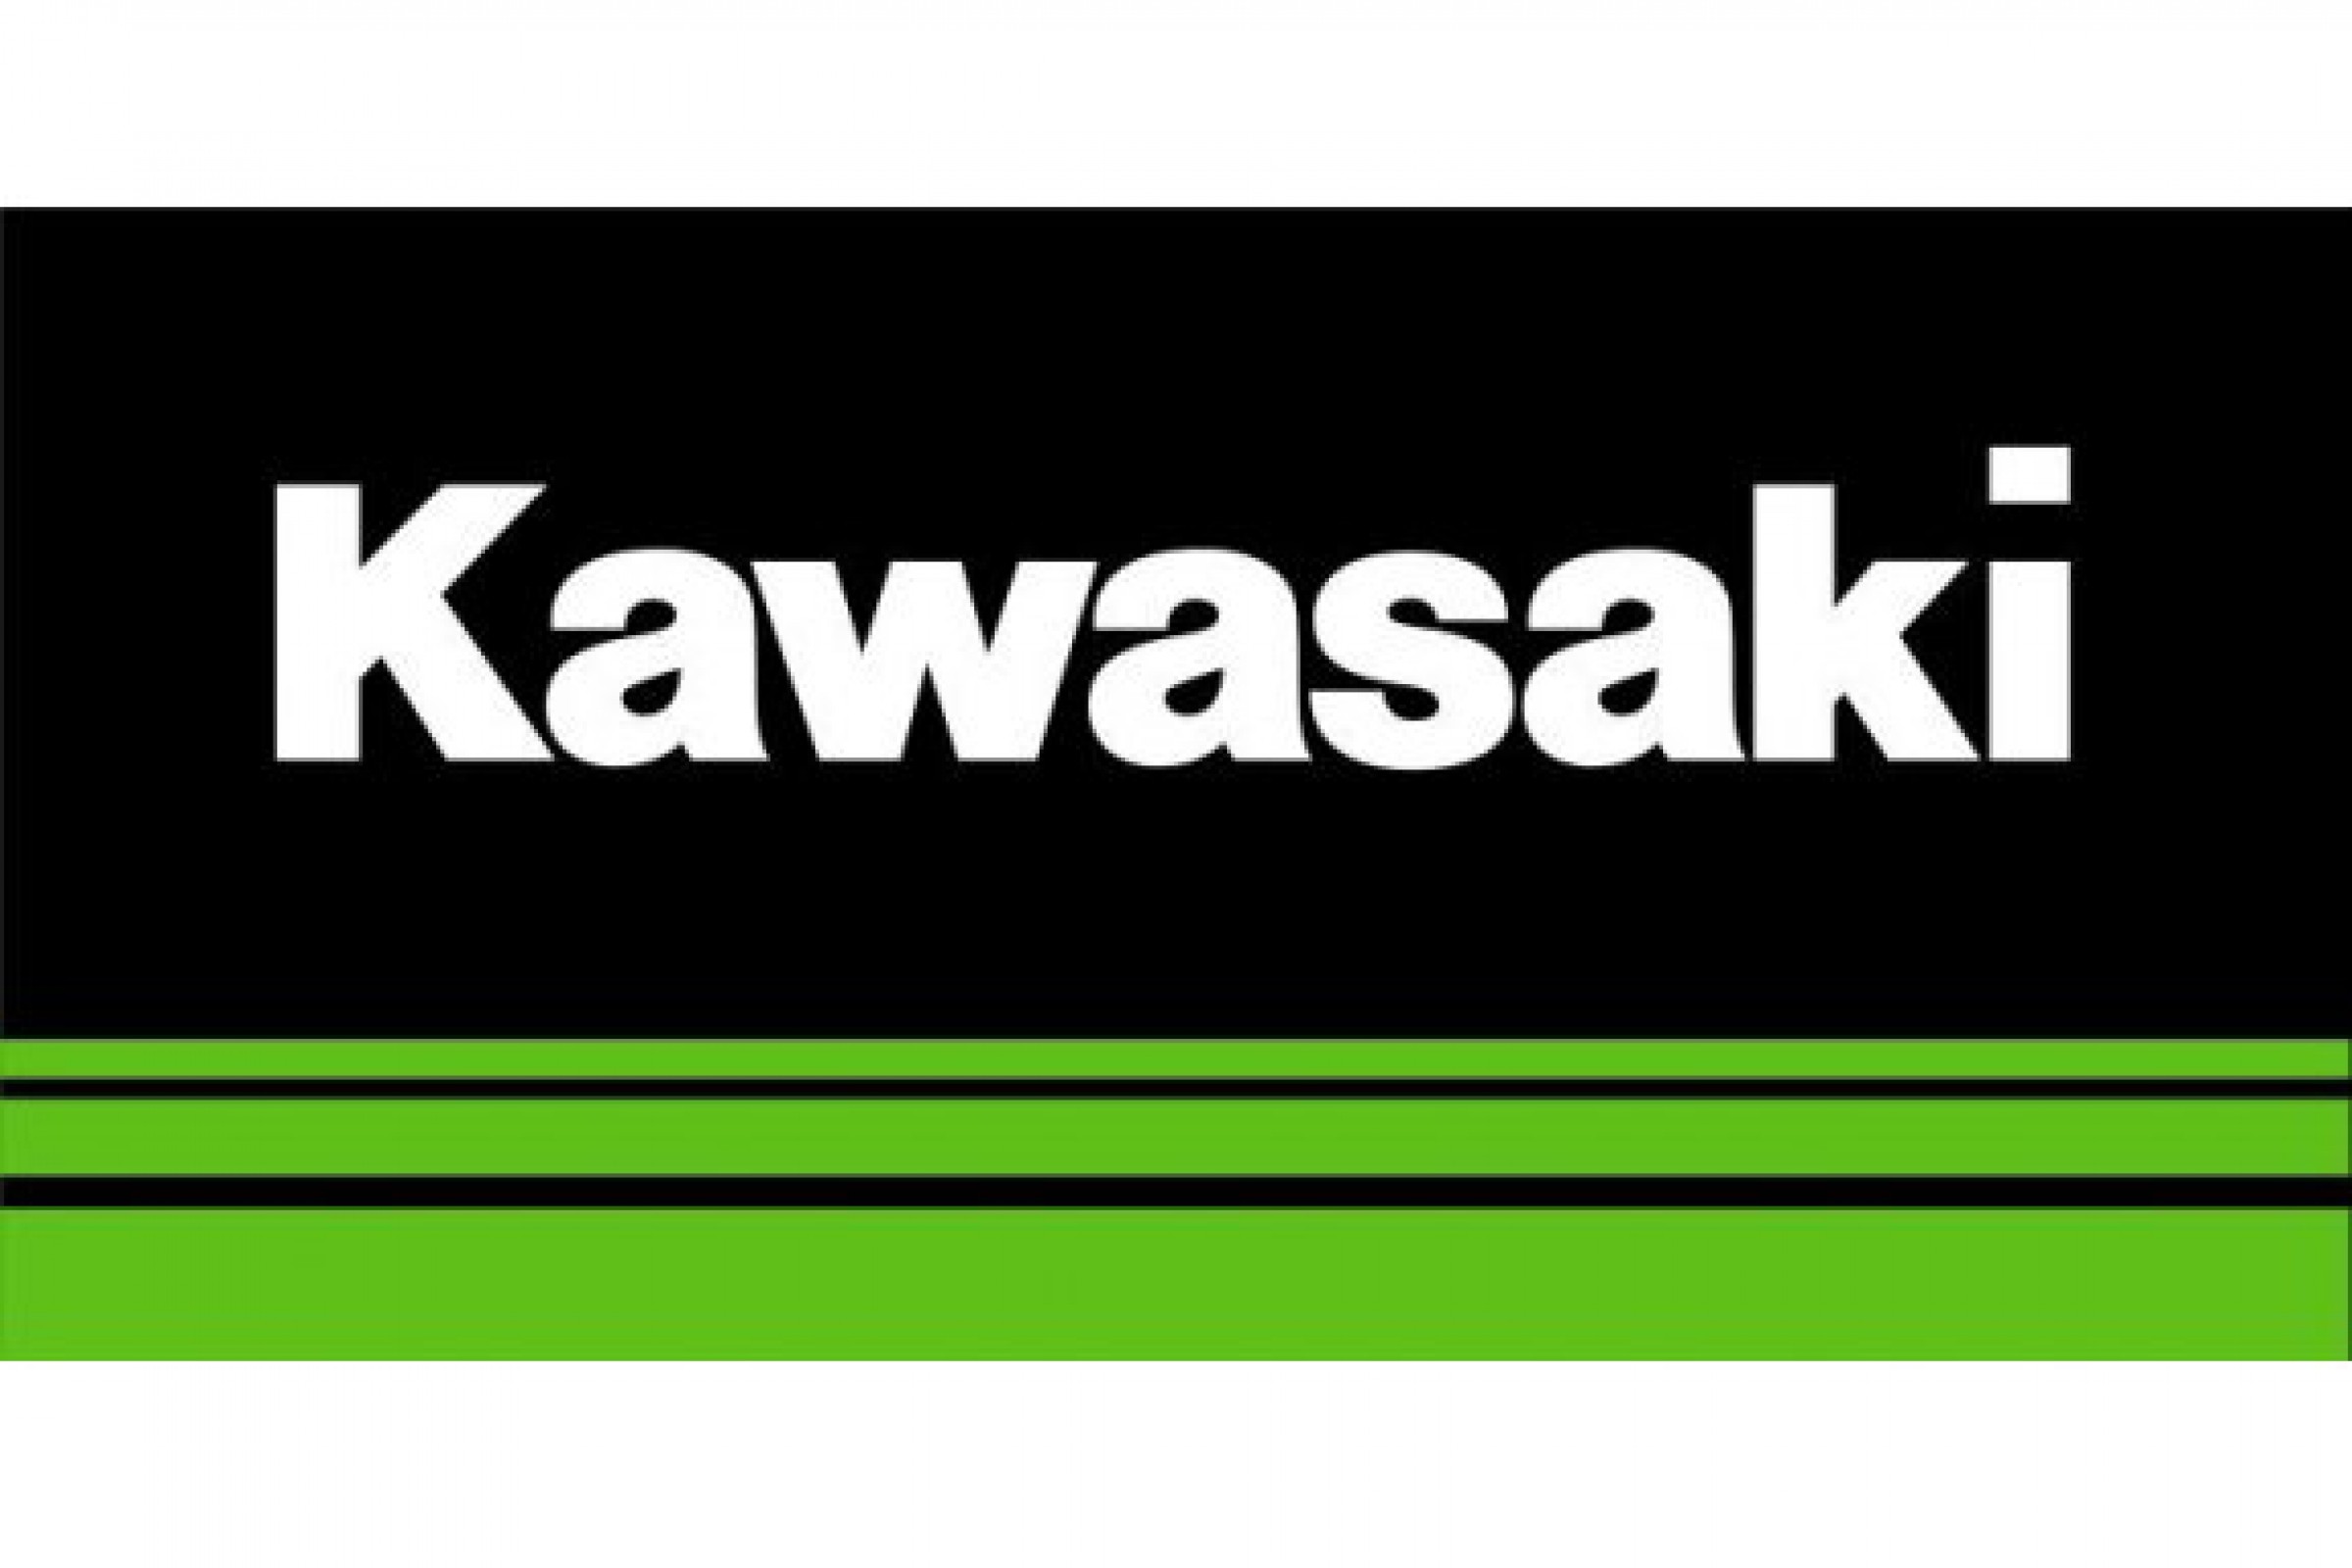 kawasaki racing team logo